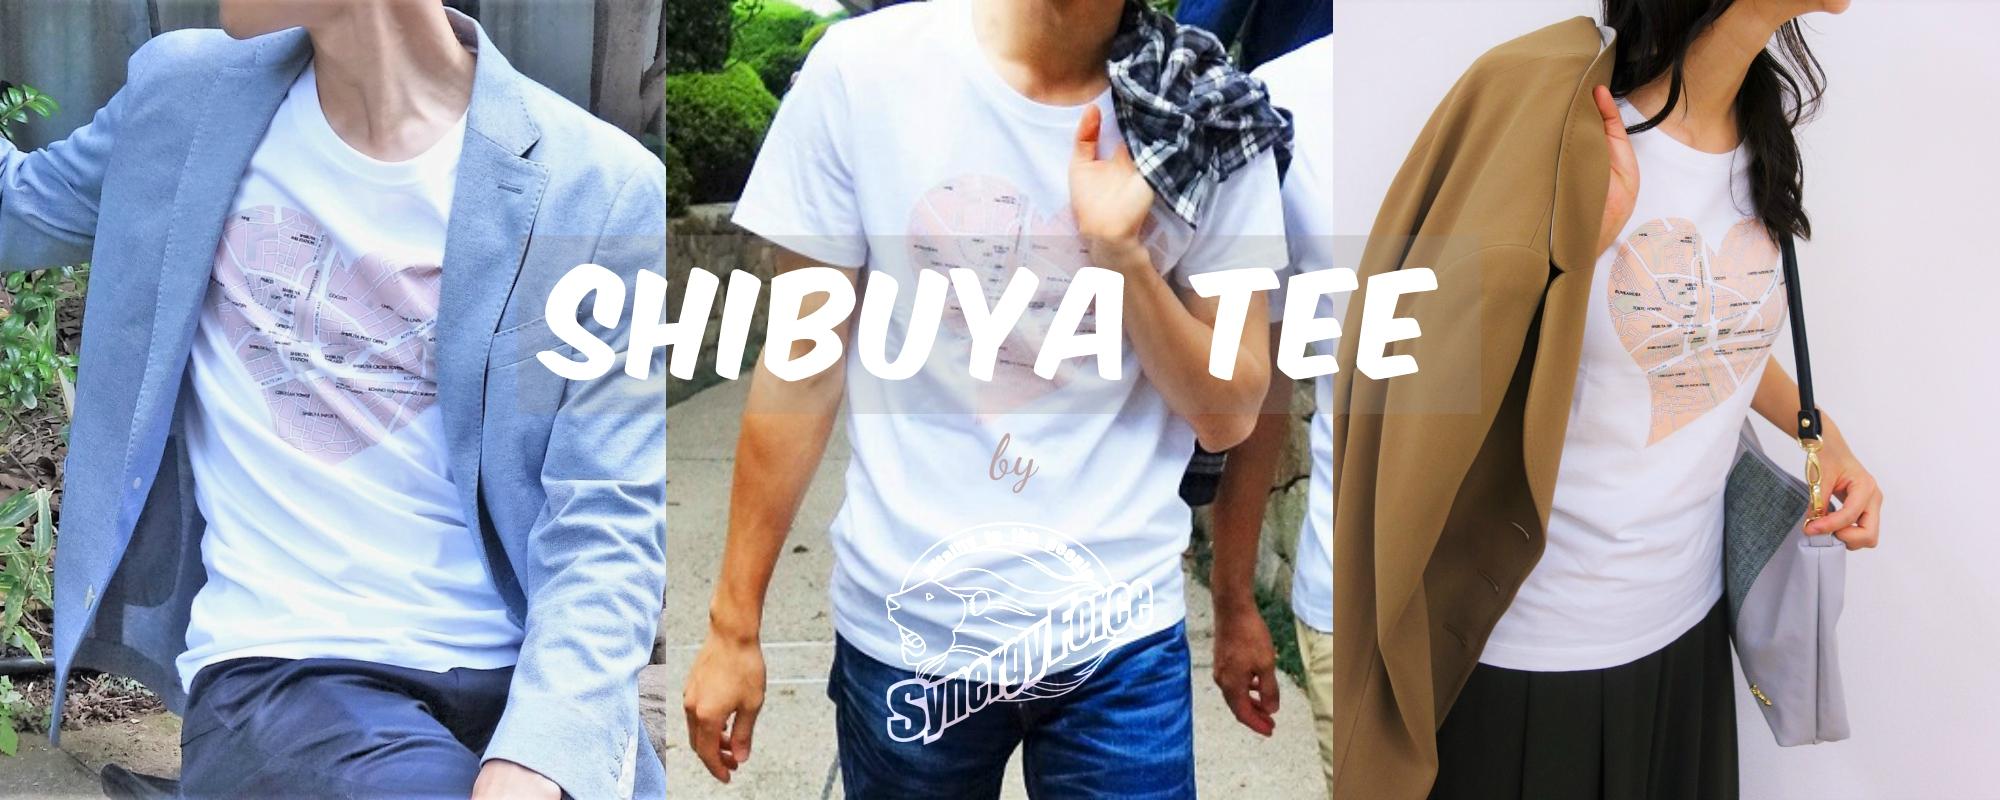 Synergy Force Original SHIBUYA T-Shirts. Shelina Moreda / Avalon Biddle / Photographer: Jin Sasaki